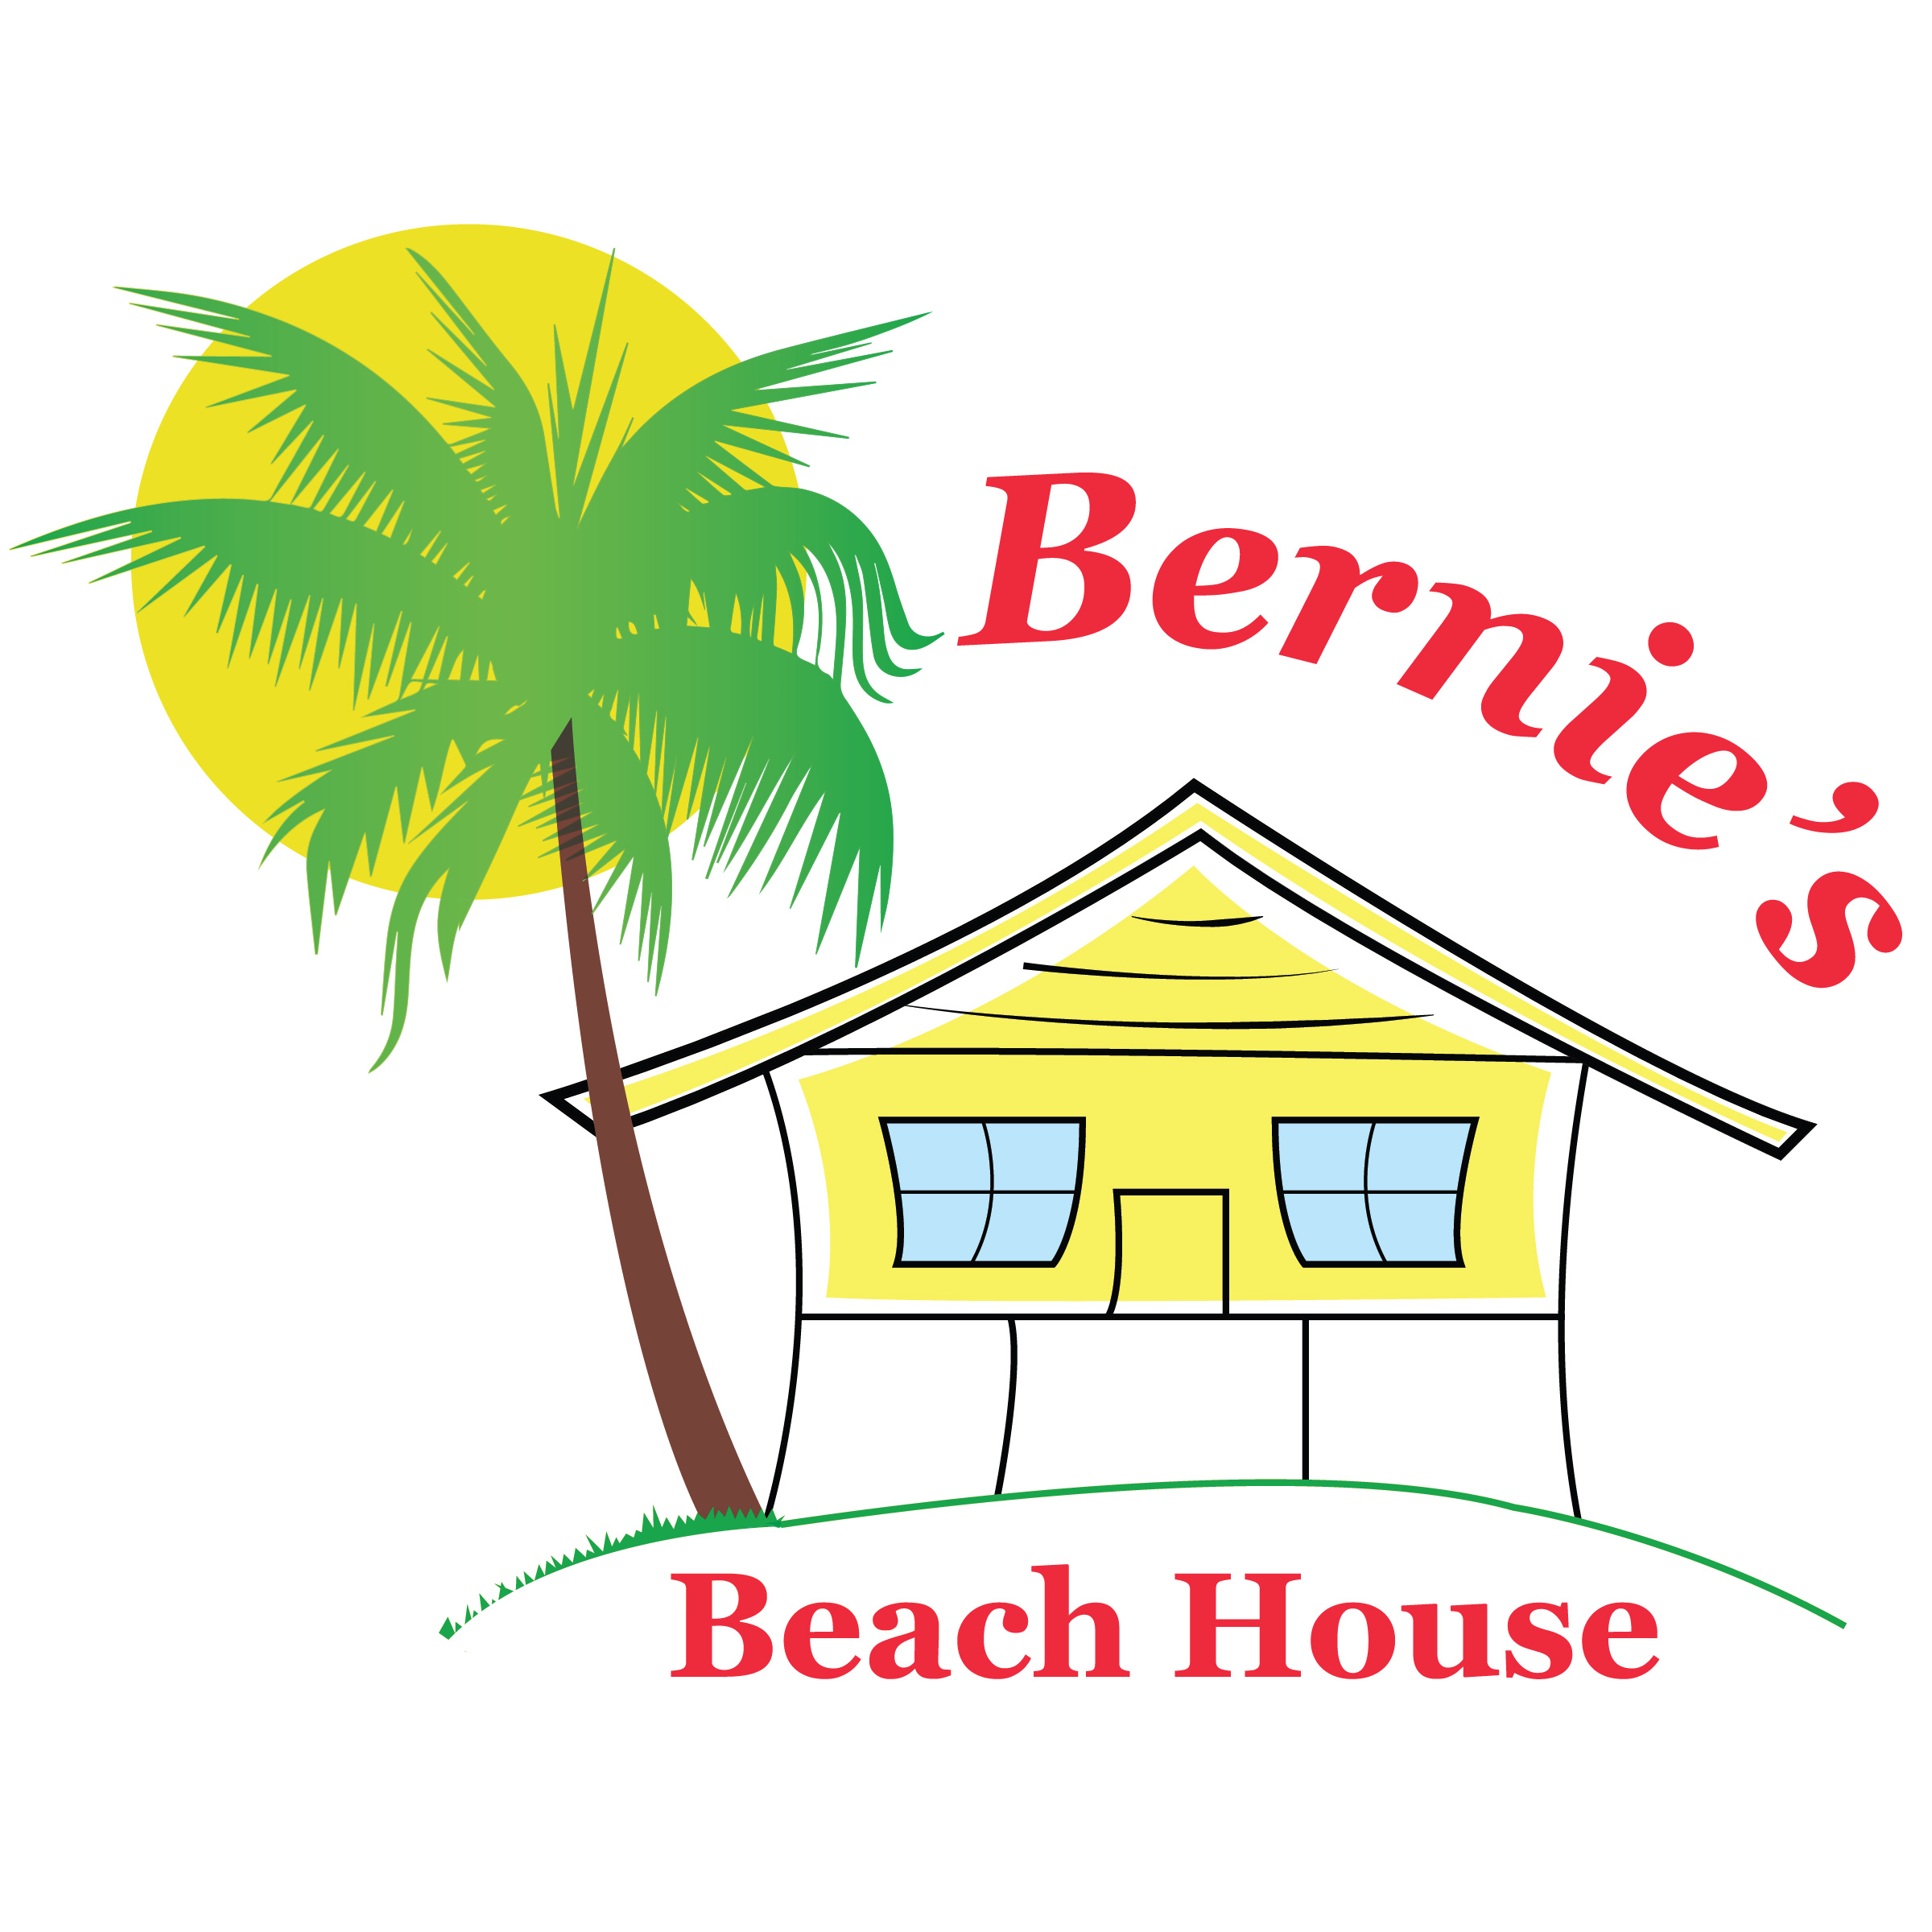 Bernie's beach house